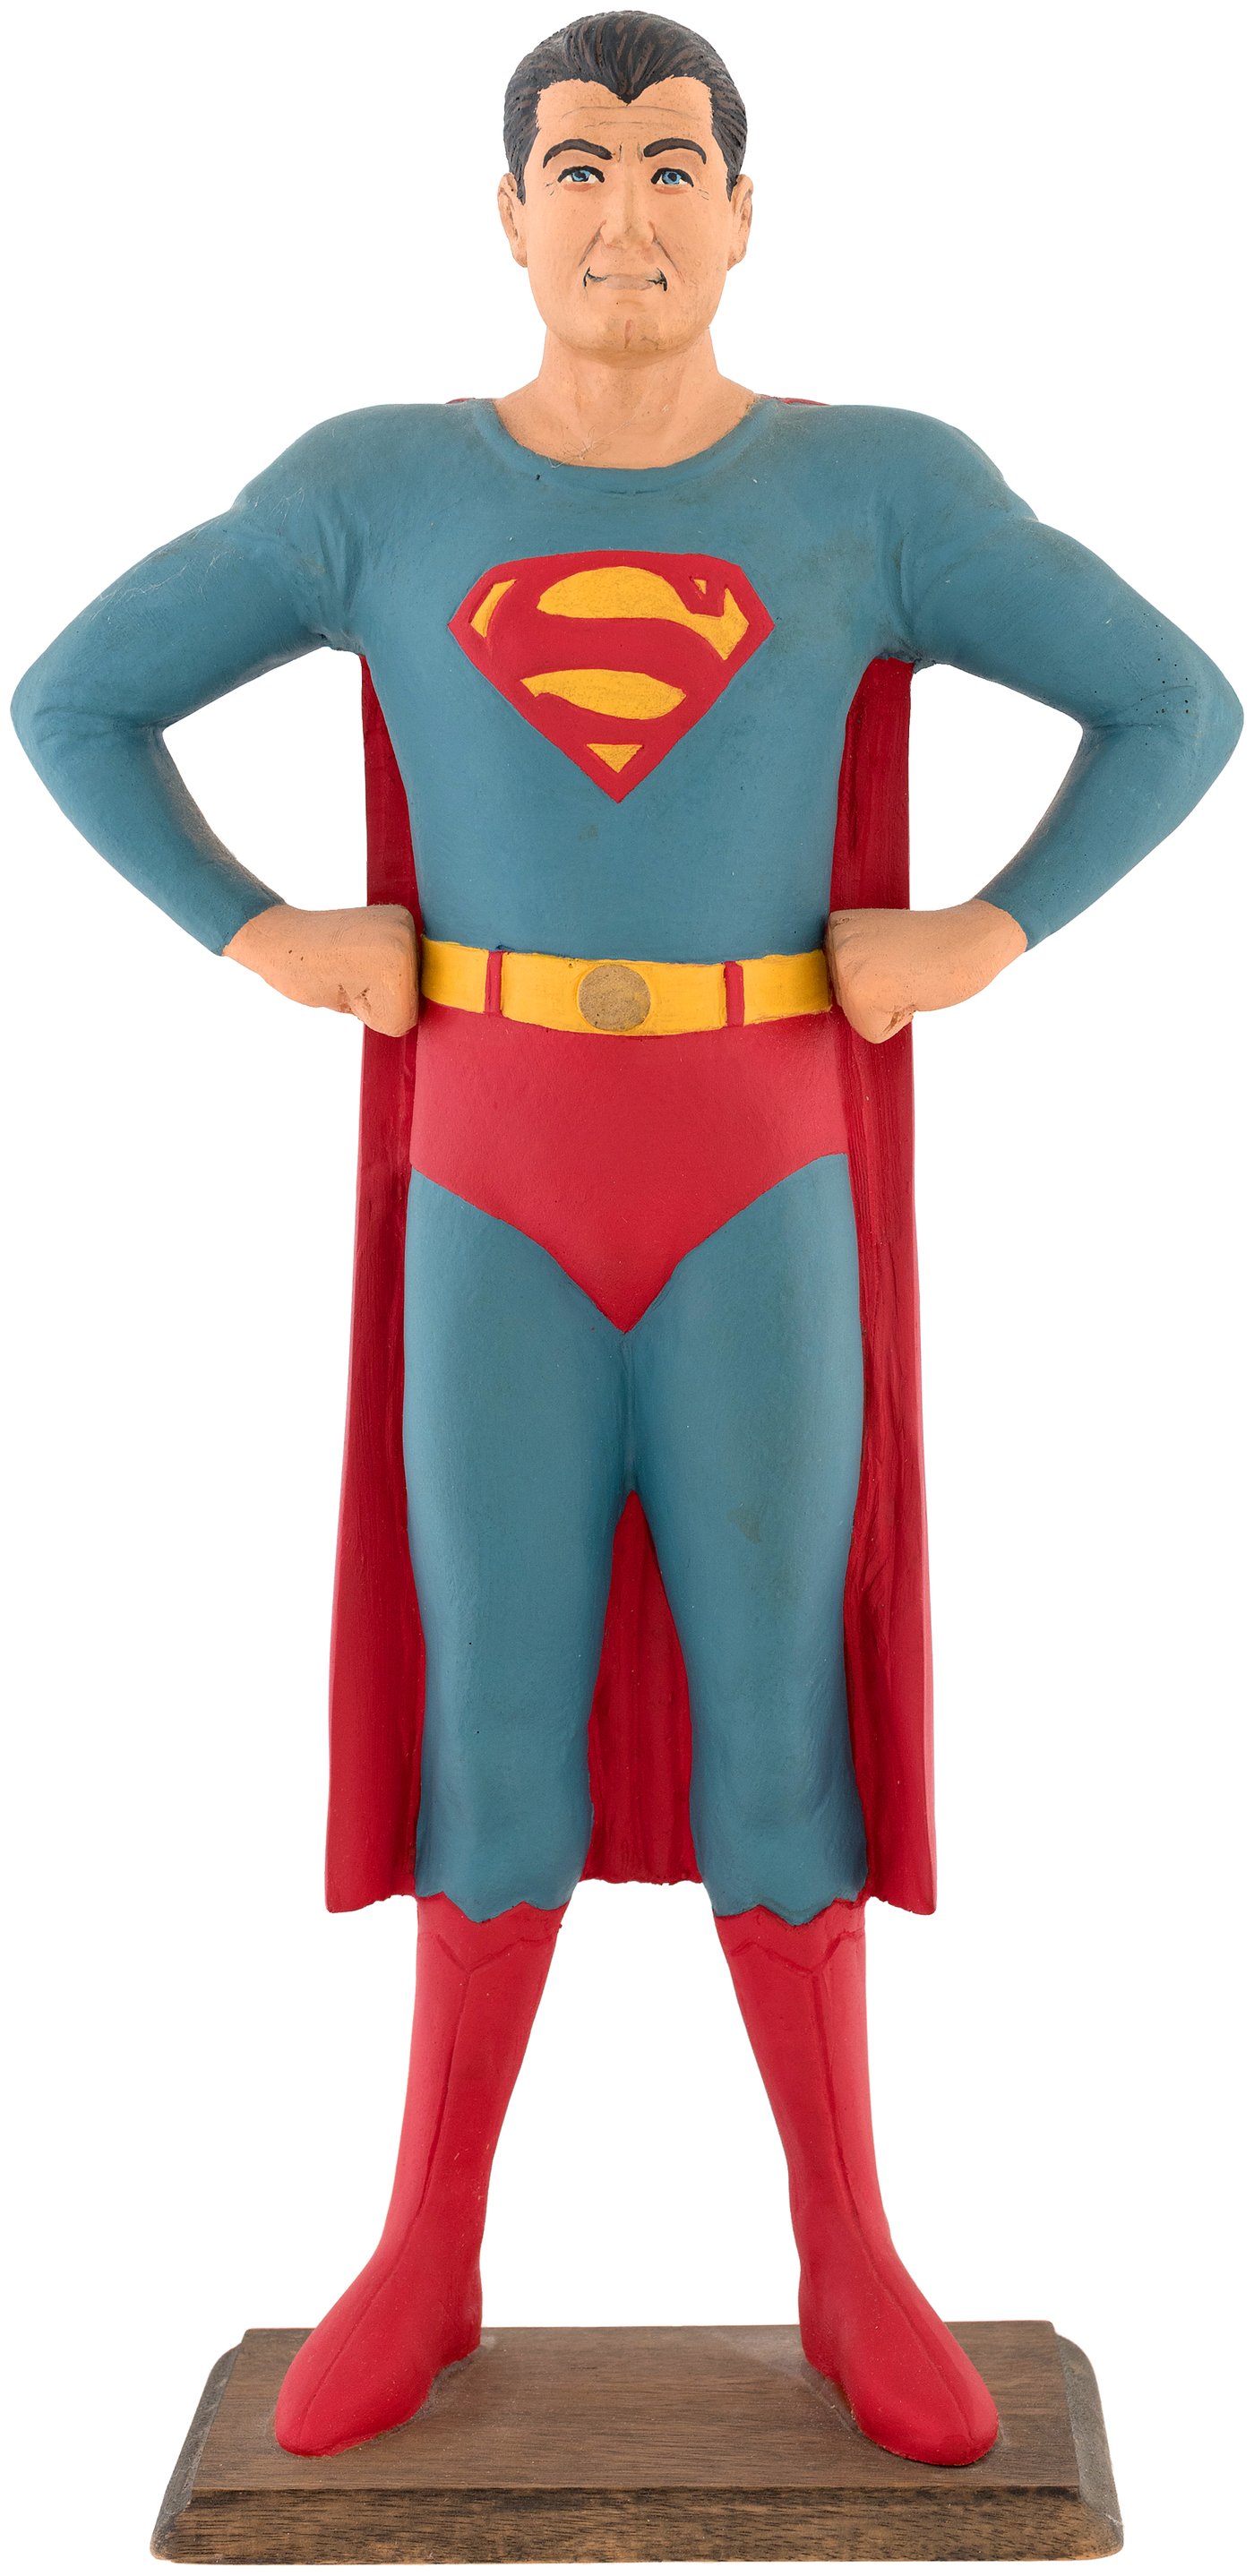 Superman George Reeves Color Figure Tabletop Display Standee 10 1/2" Tall 